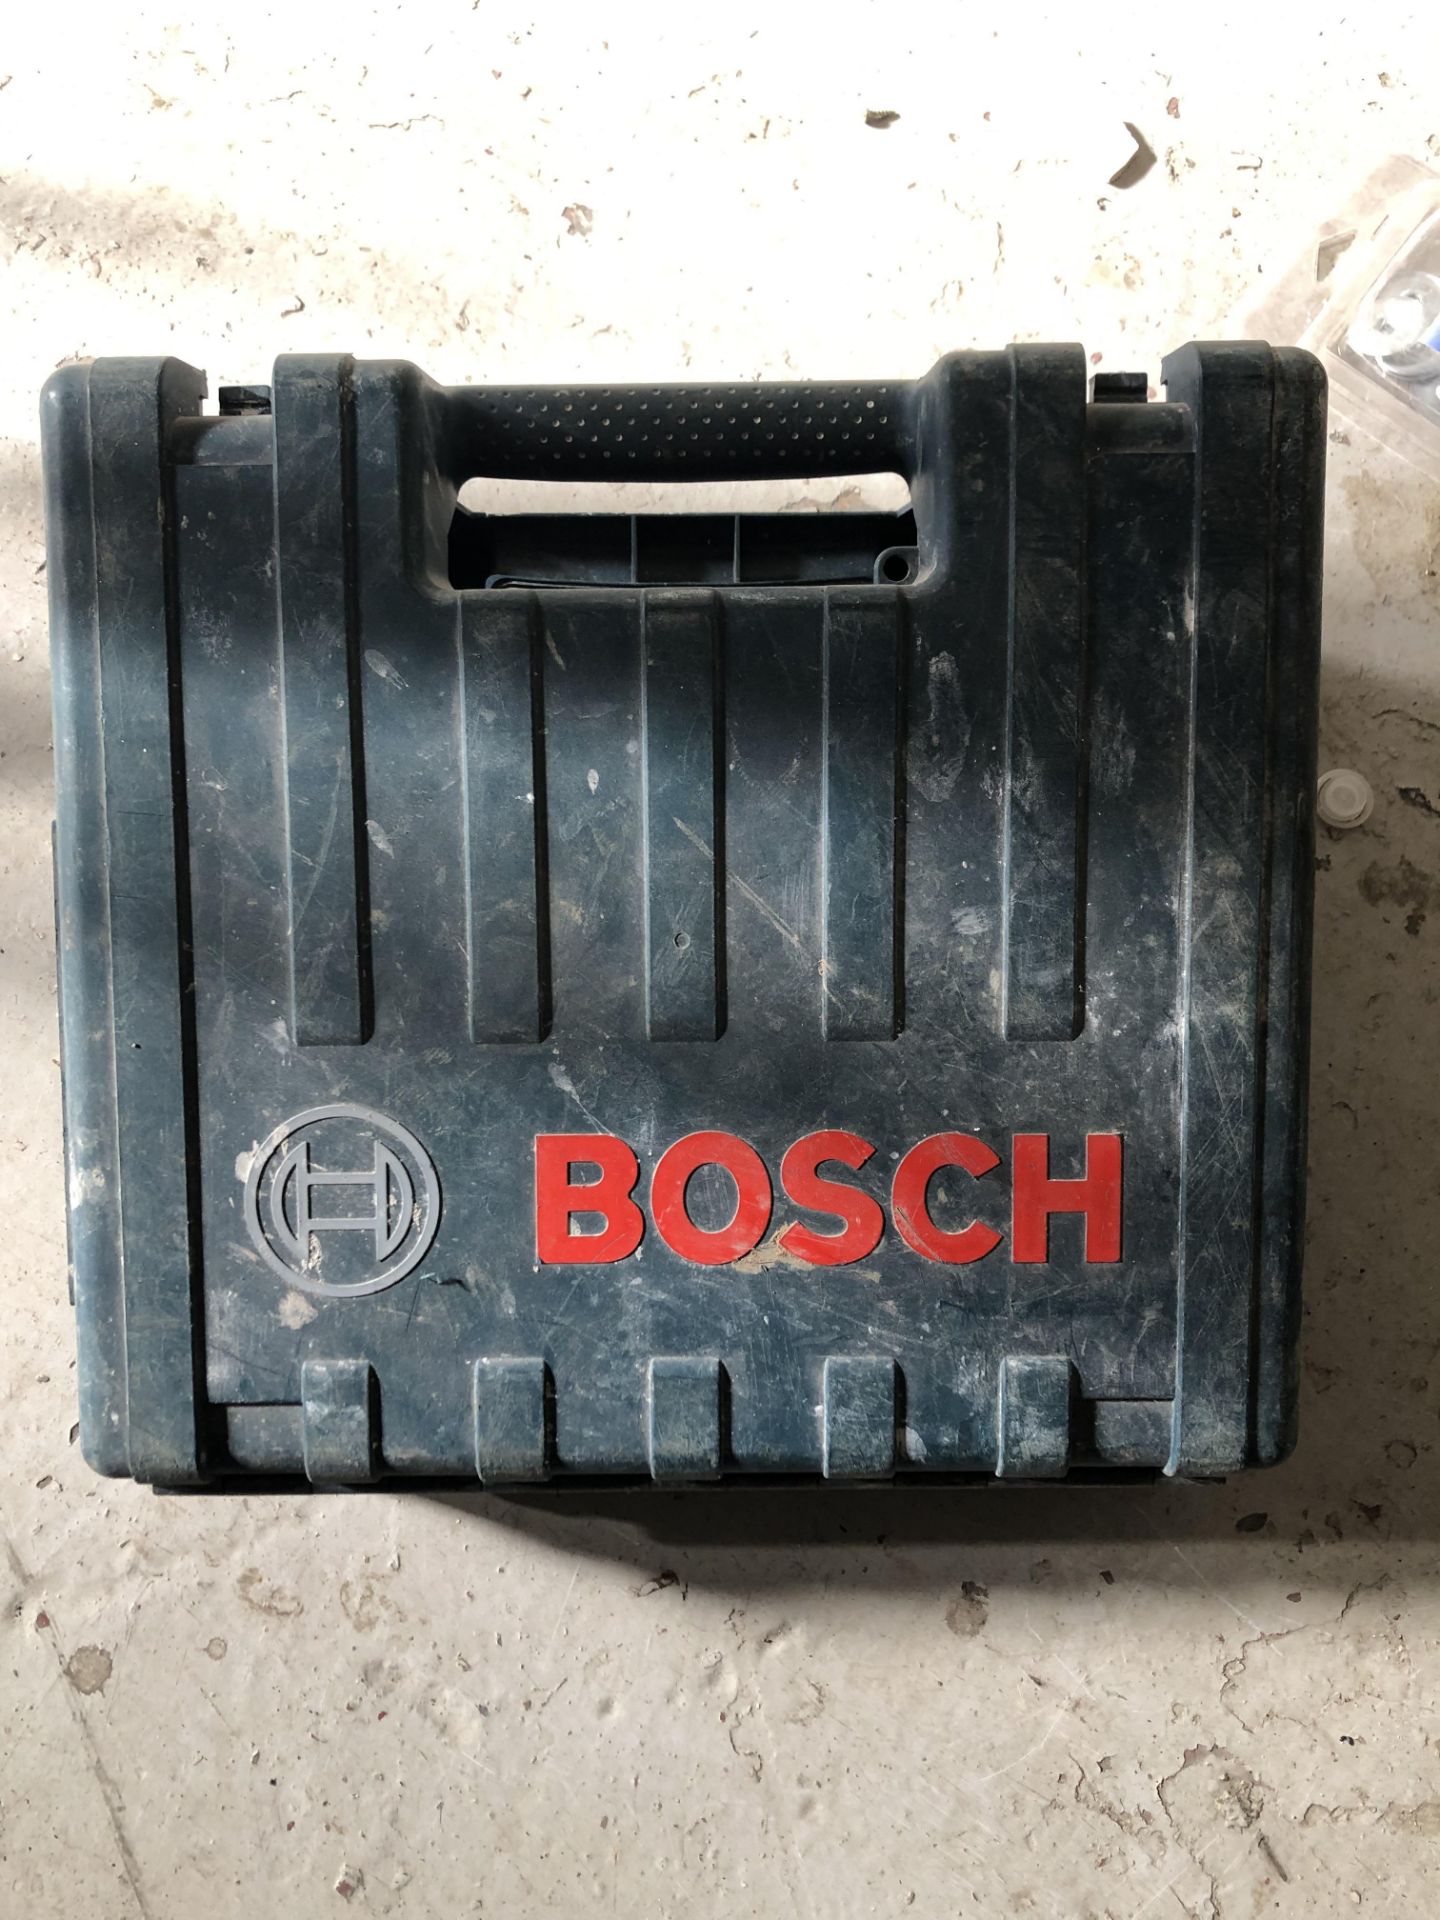 Bosch 110v Drill & Carry Case.